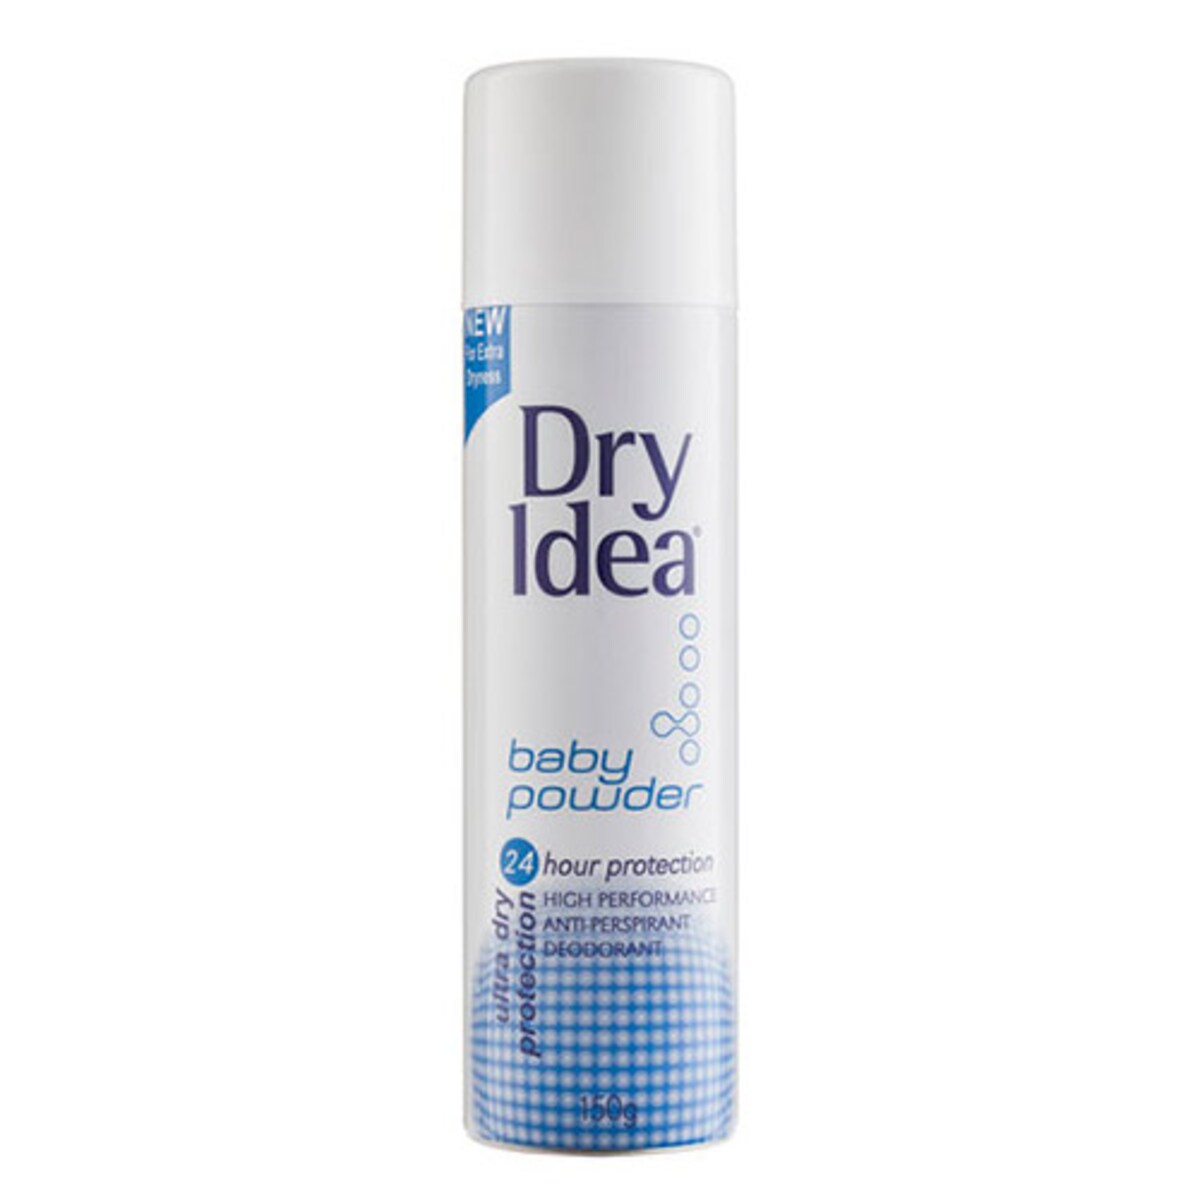 Dry Idea Anti Perspirant Deodorant Baby Powder 150g